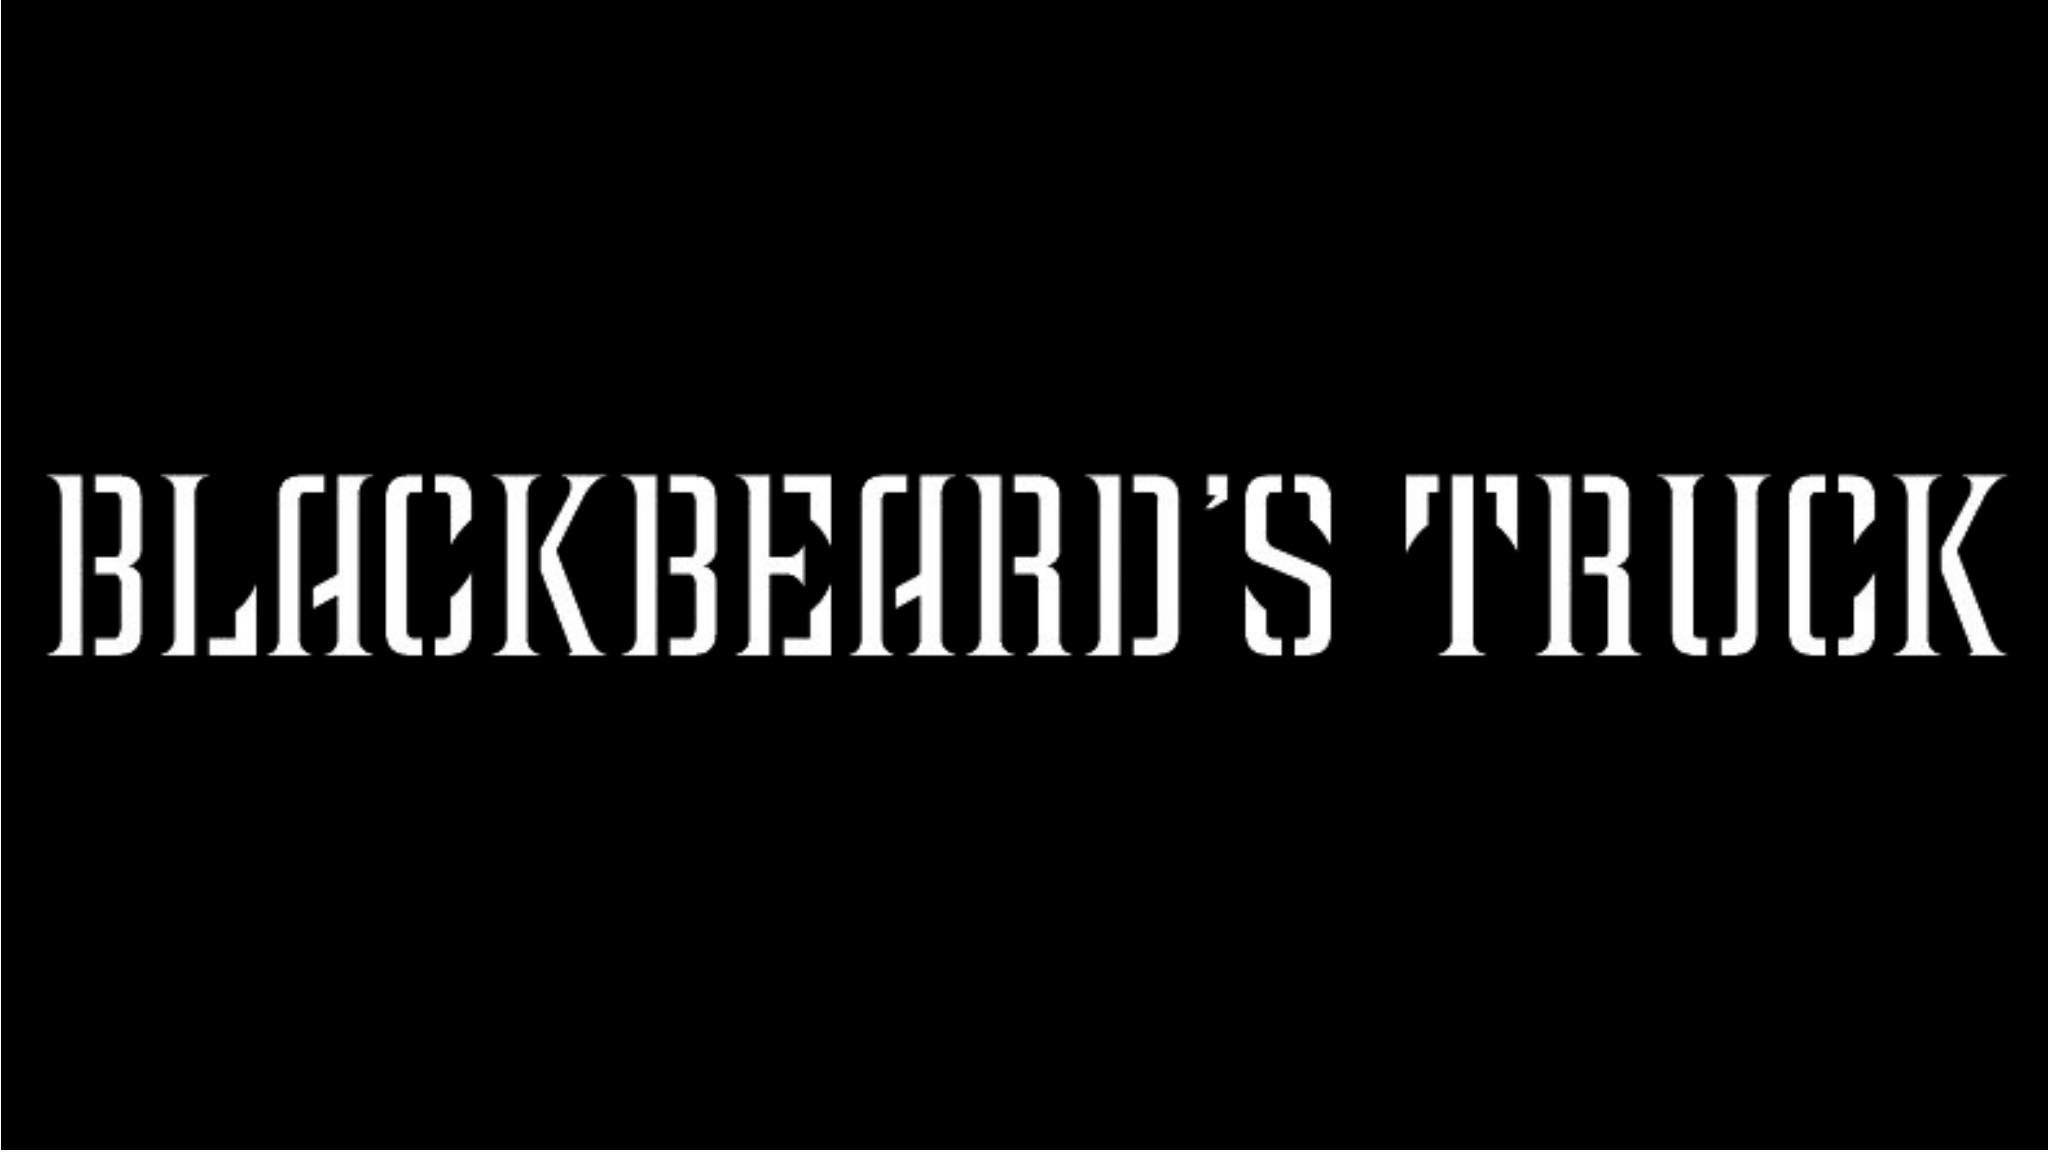 Blackbeard's Truck.jpeg